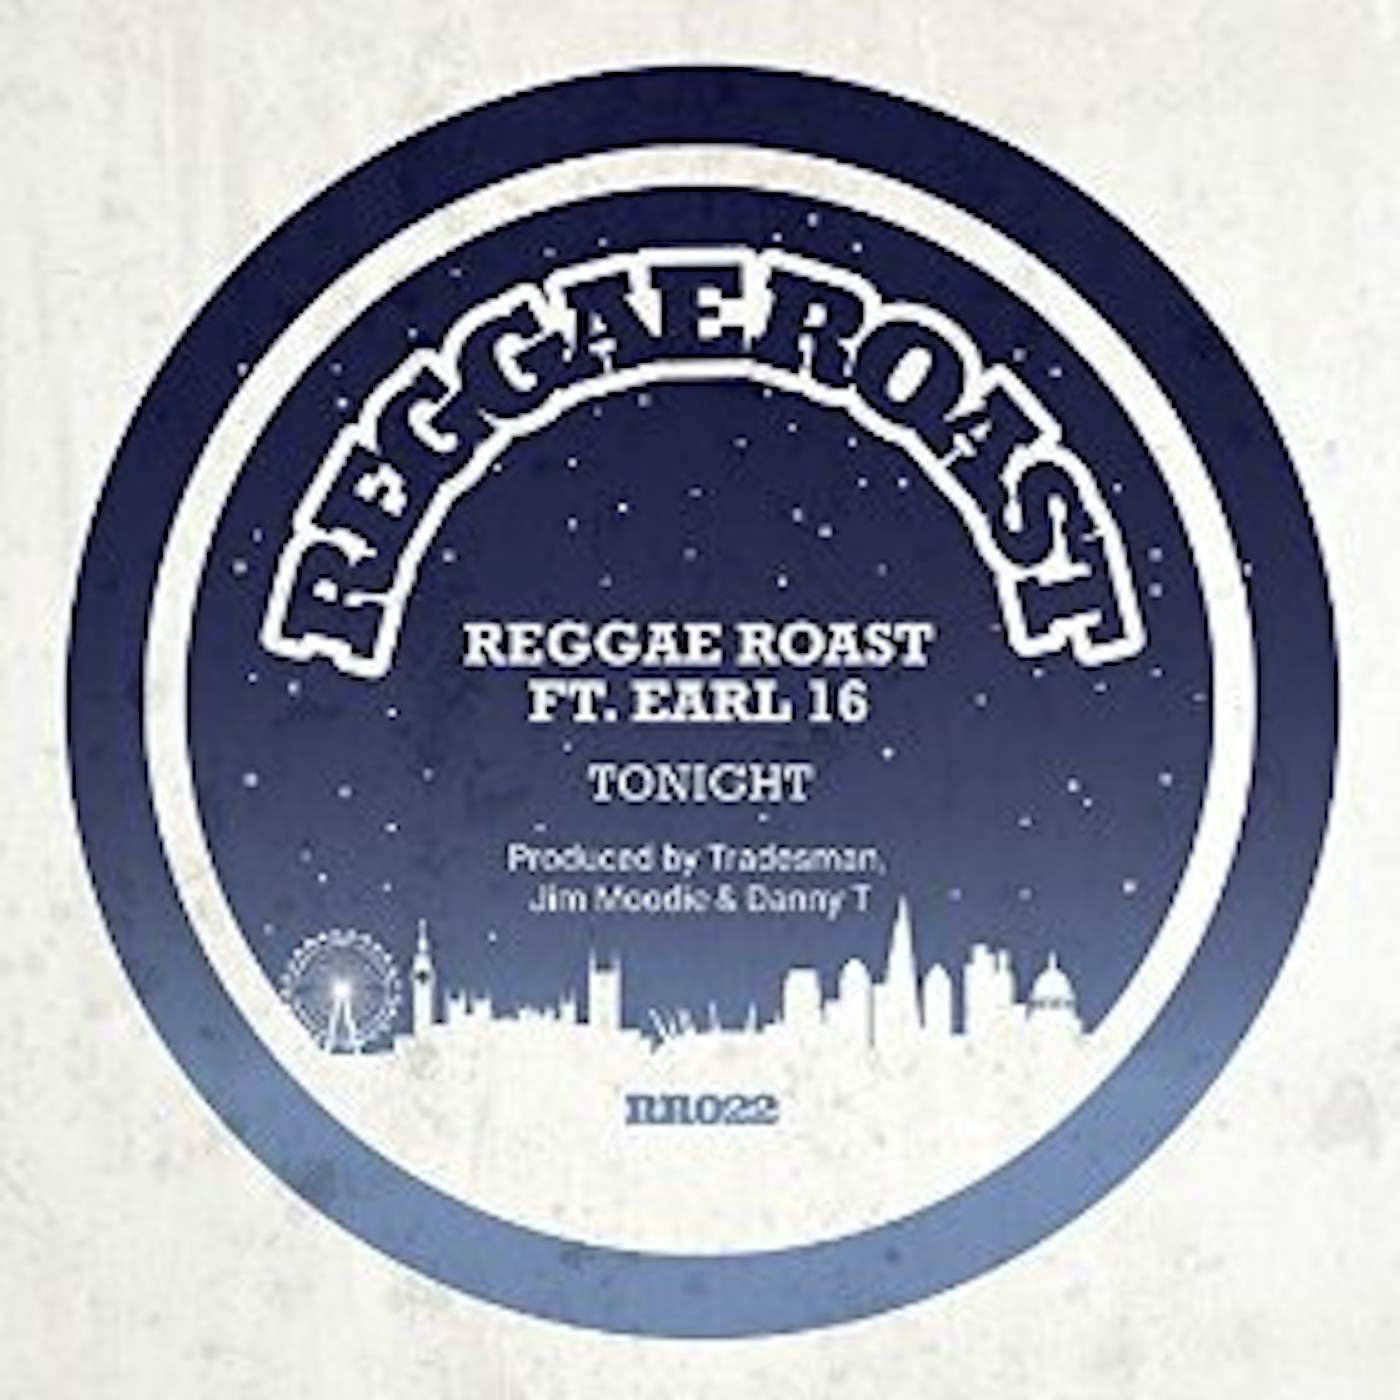 REGGAE ROAST / EARL 16 TONIGHT Vinyl Record